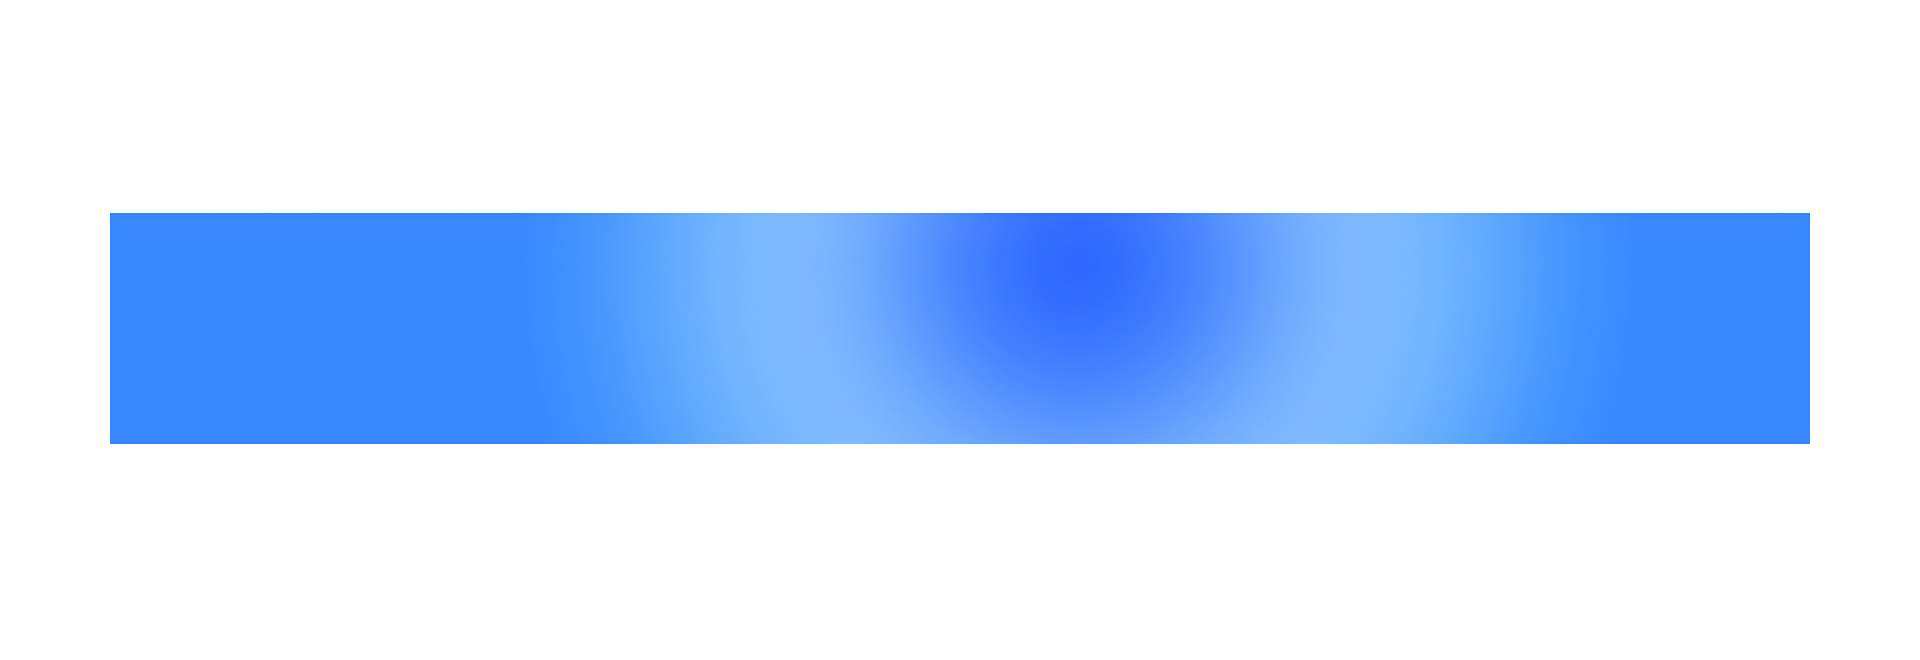 Línea azul PNG photo